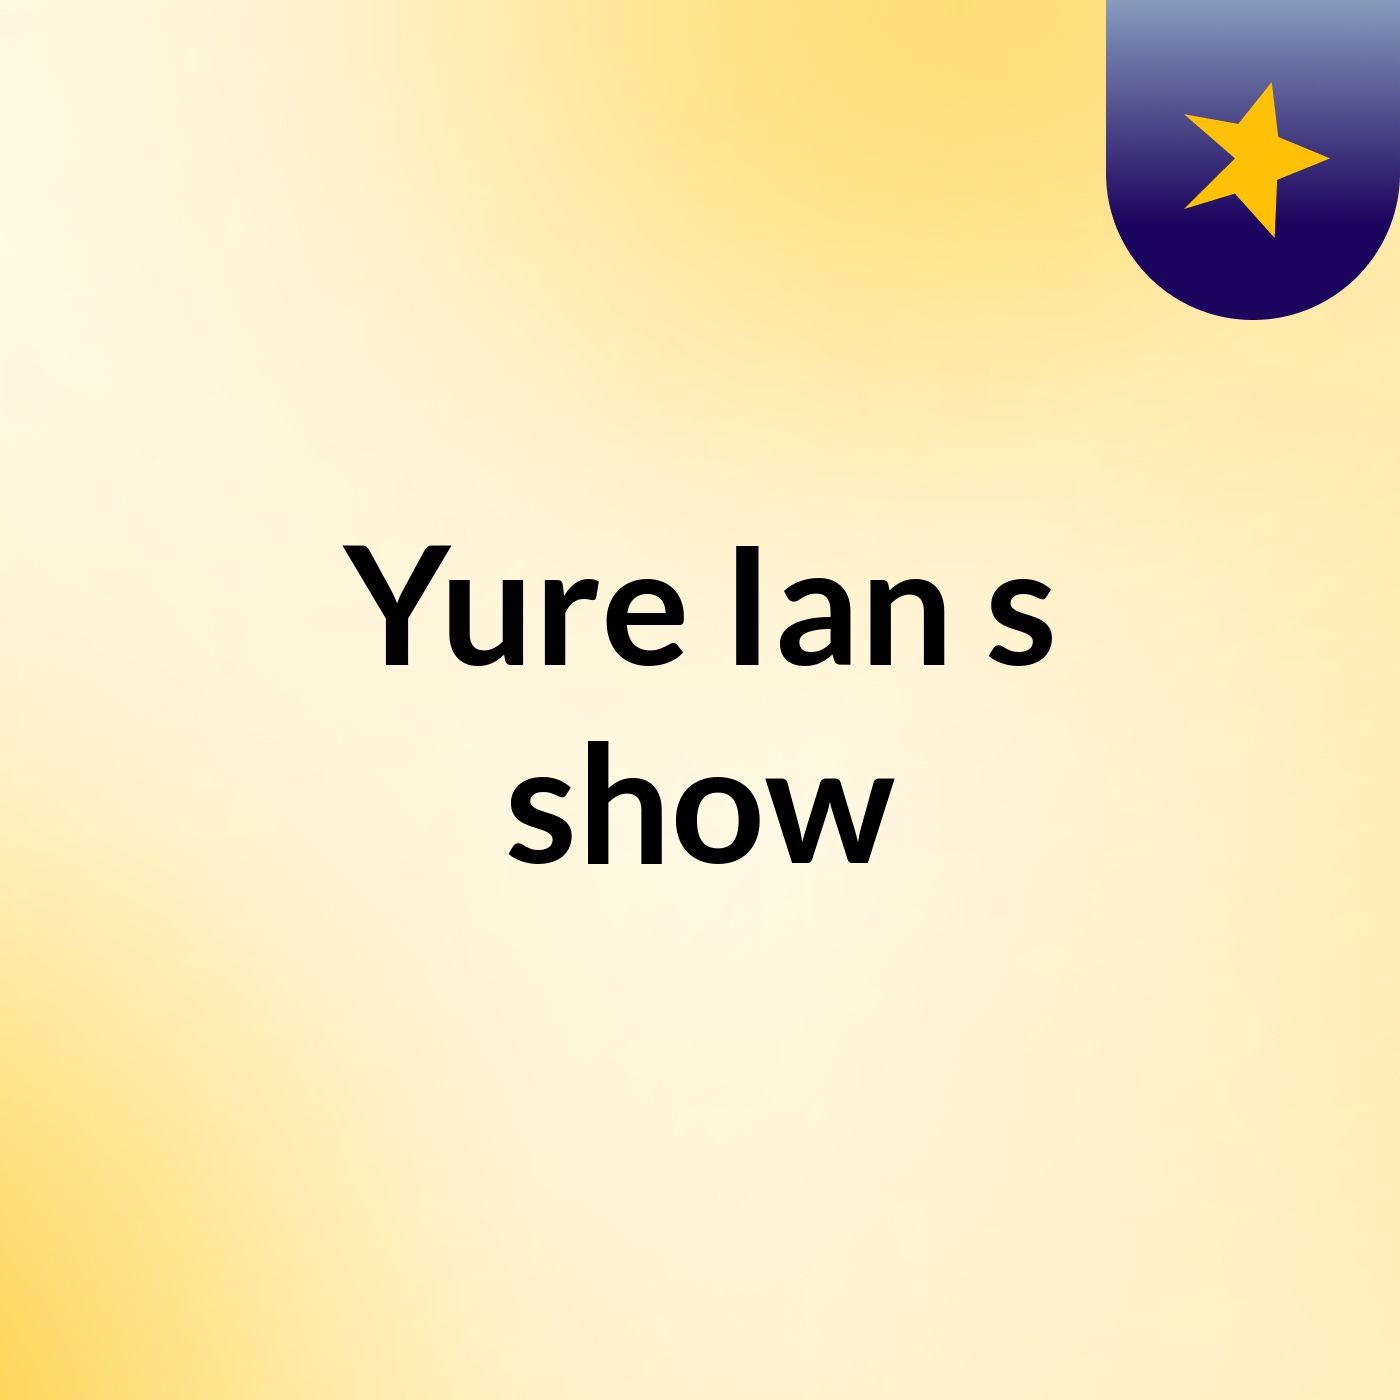 Yure Ian's show